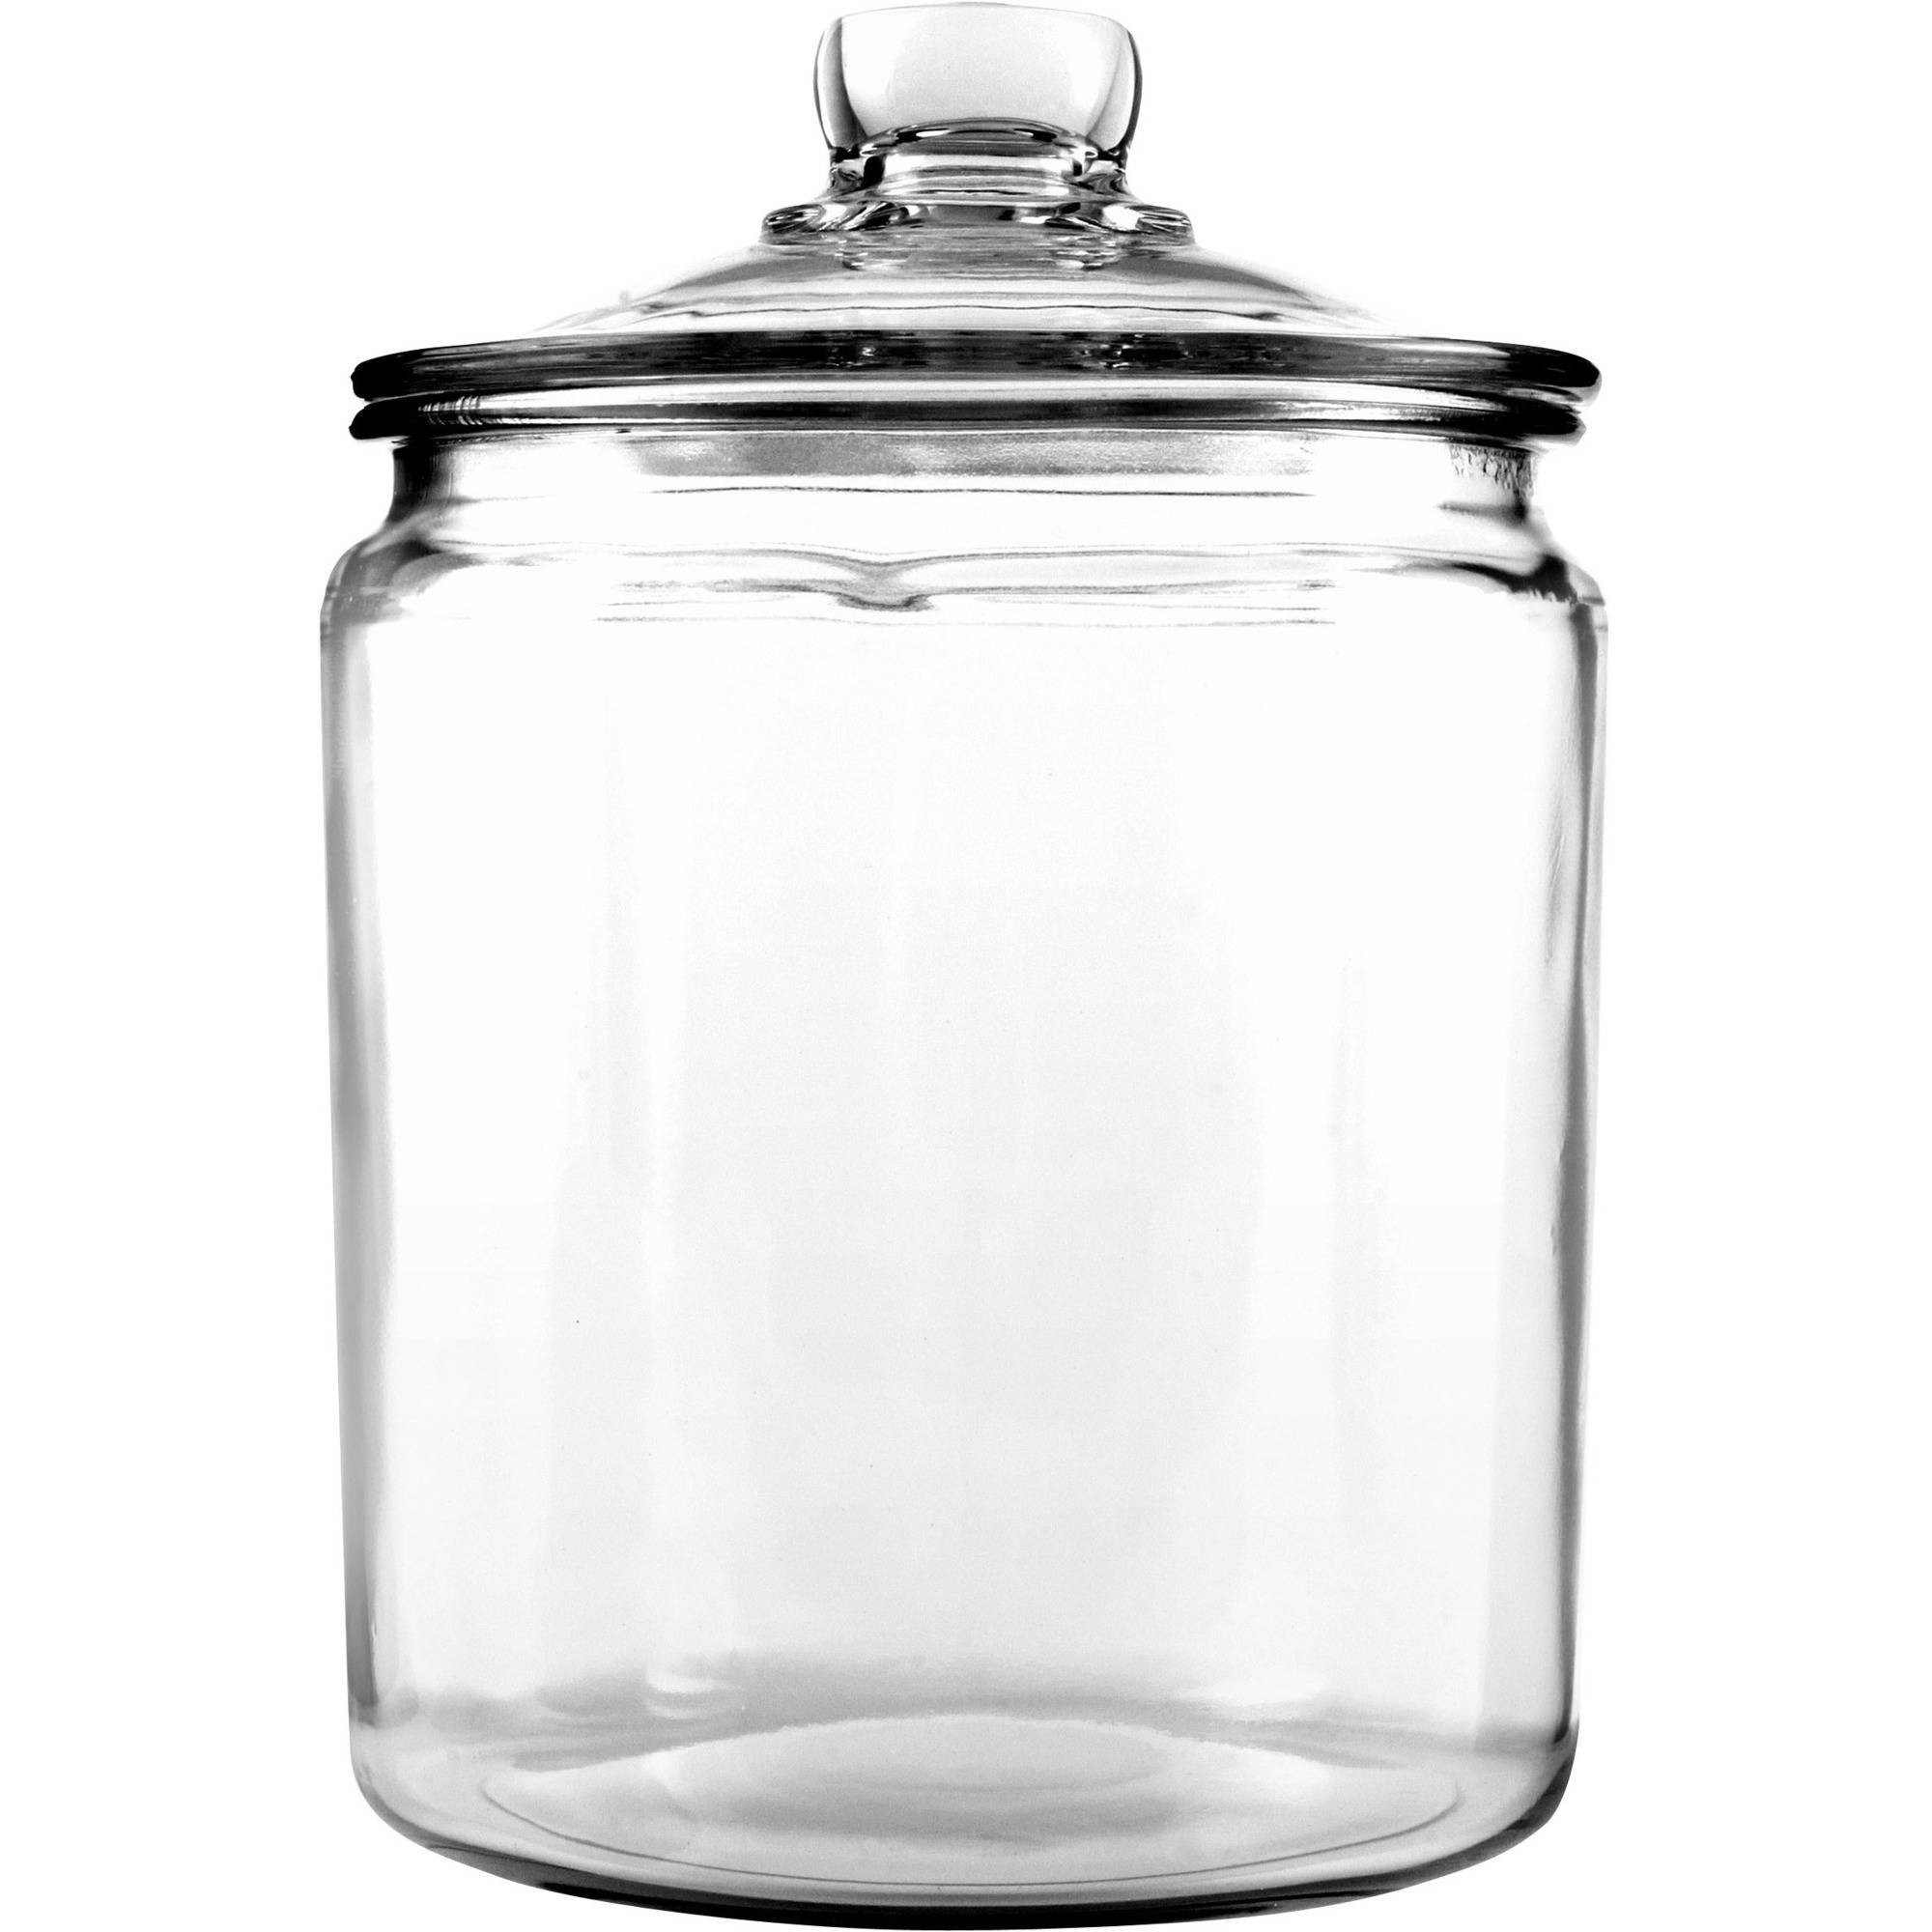 Kitchen Storage Containers Glass
 1 2 Gallon Cookies Glass Jar Food Coffee Sugar Storage